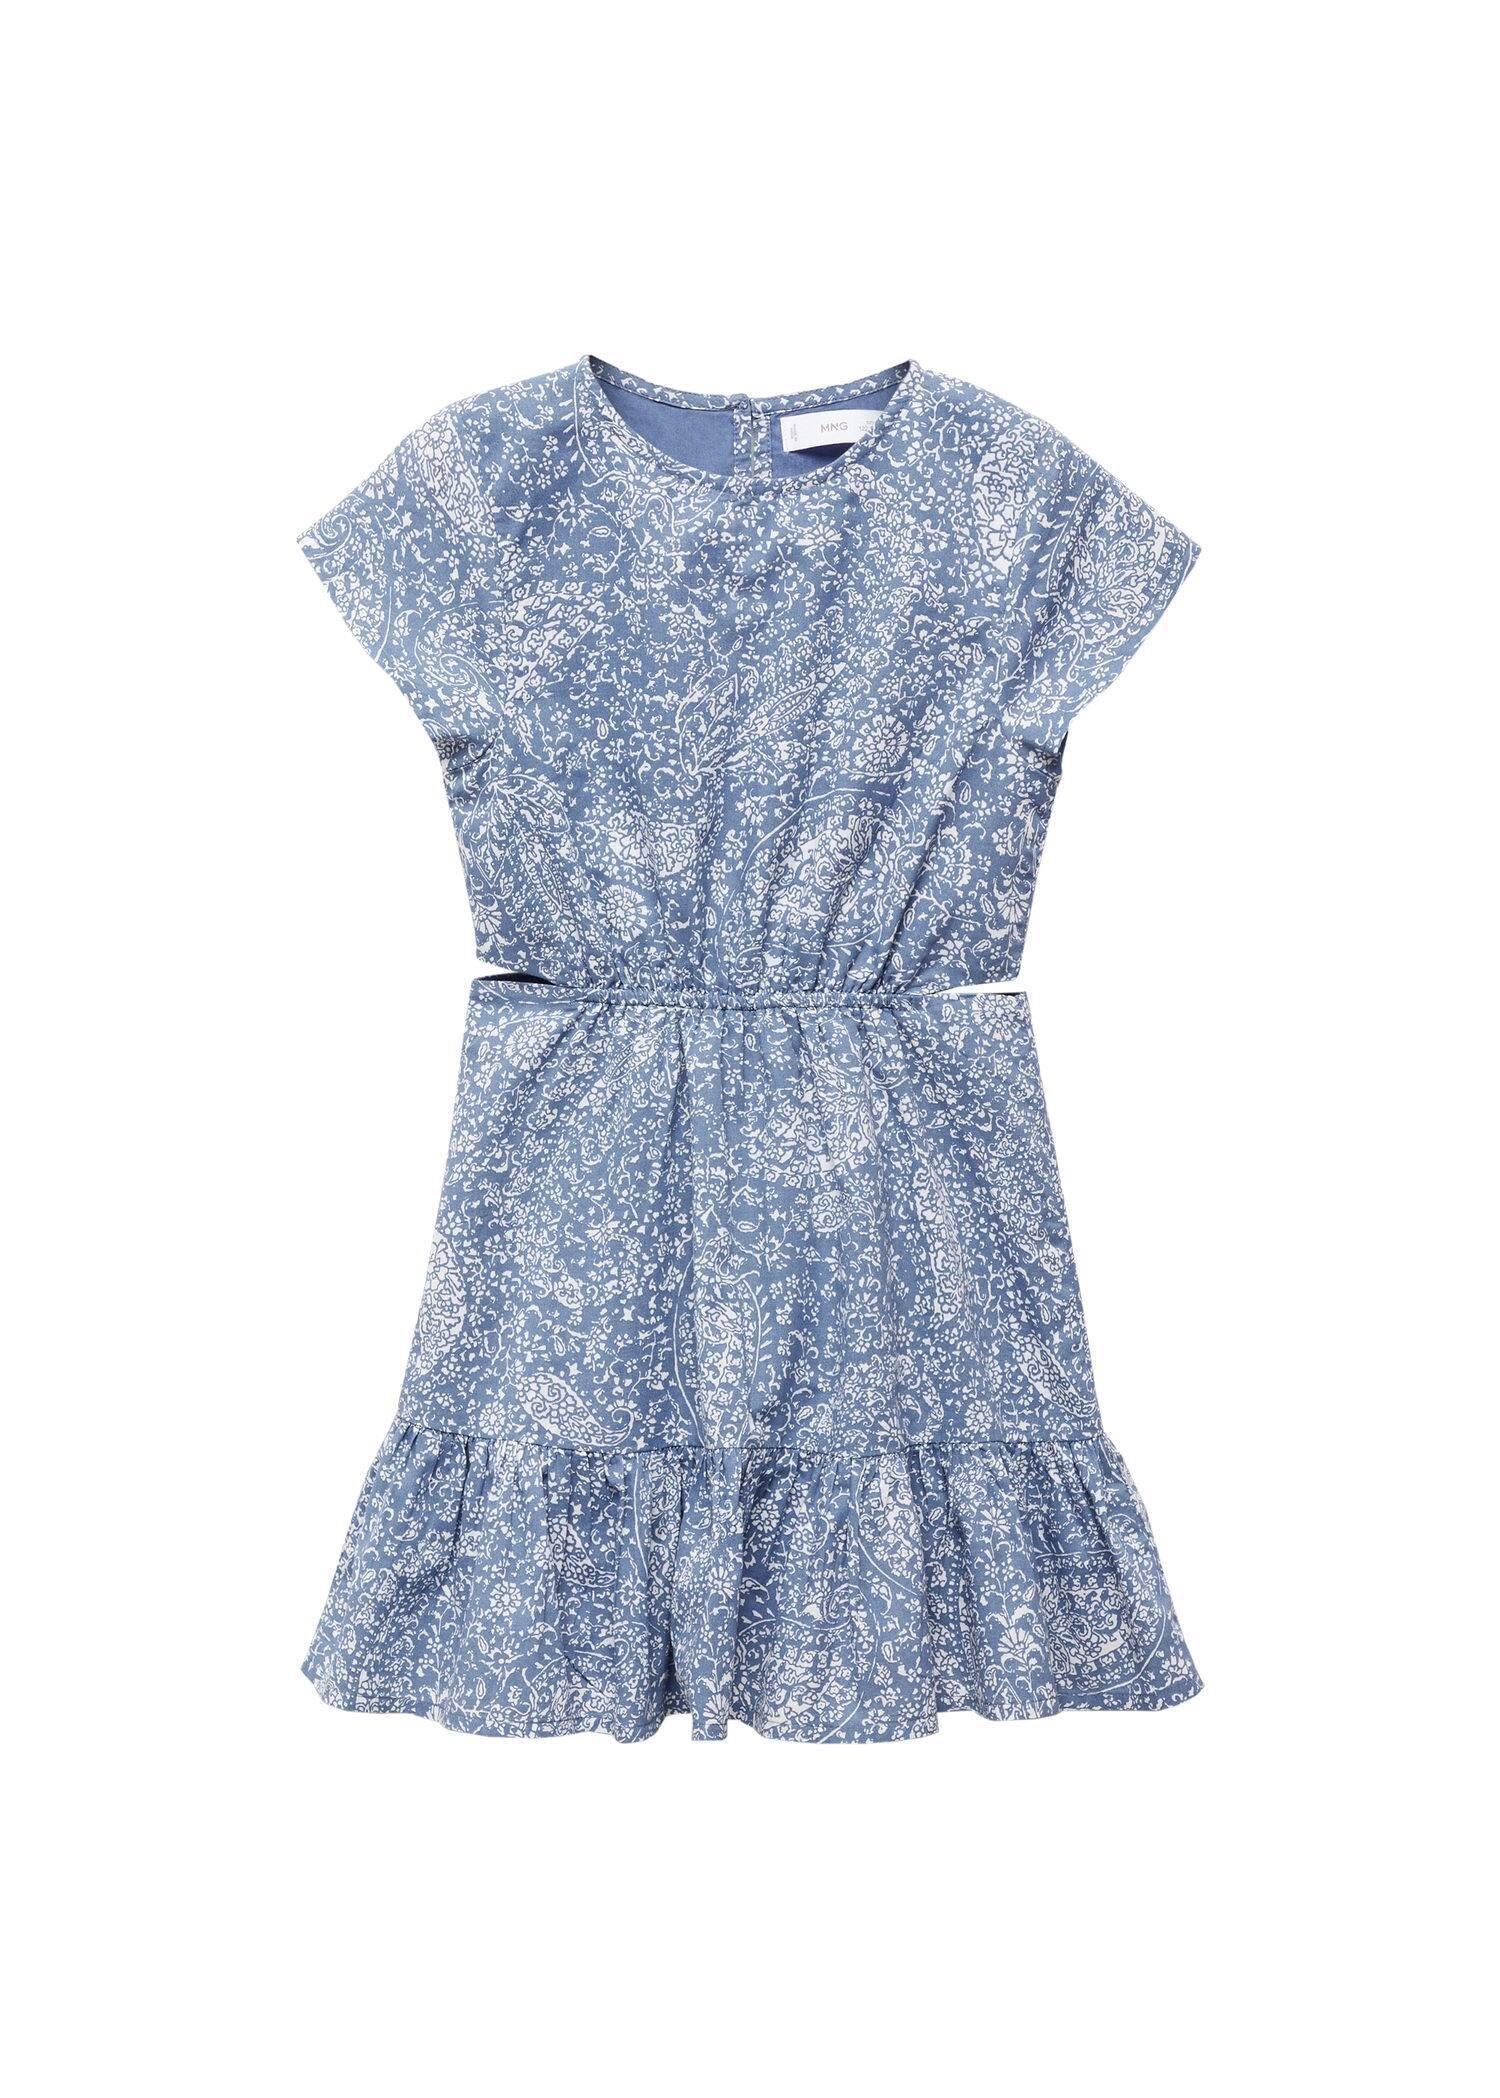 Mango - Blue Printed Dress With Openings, Kids Girls